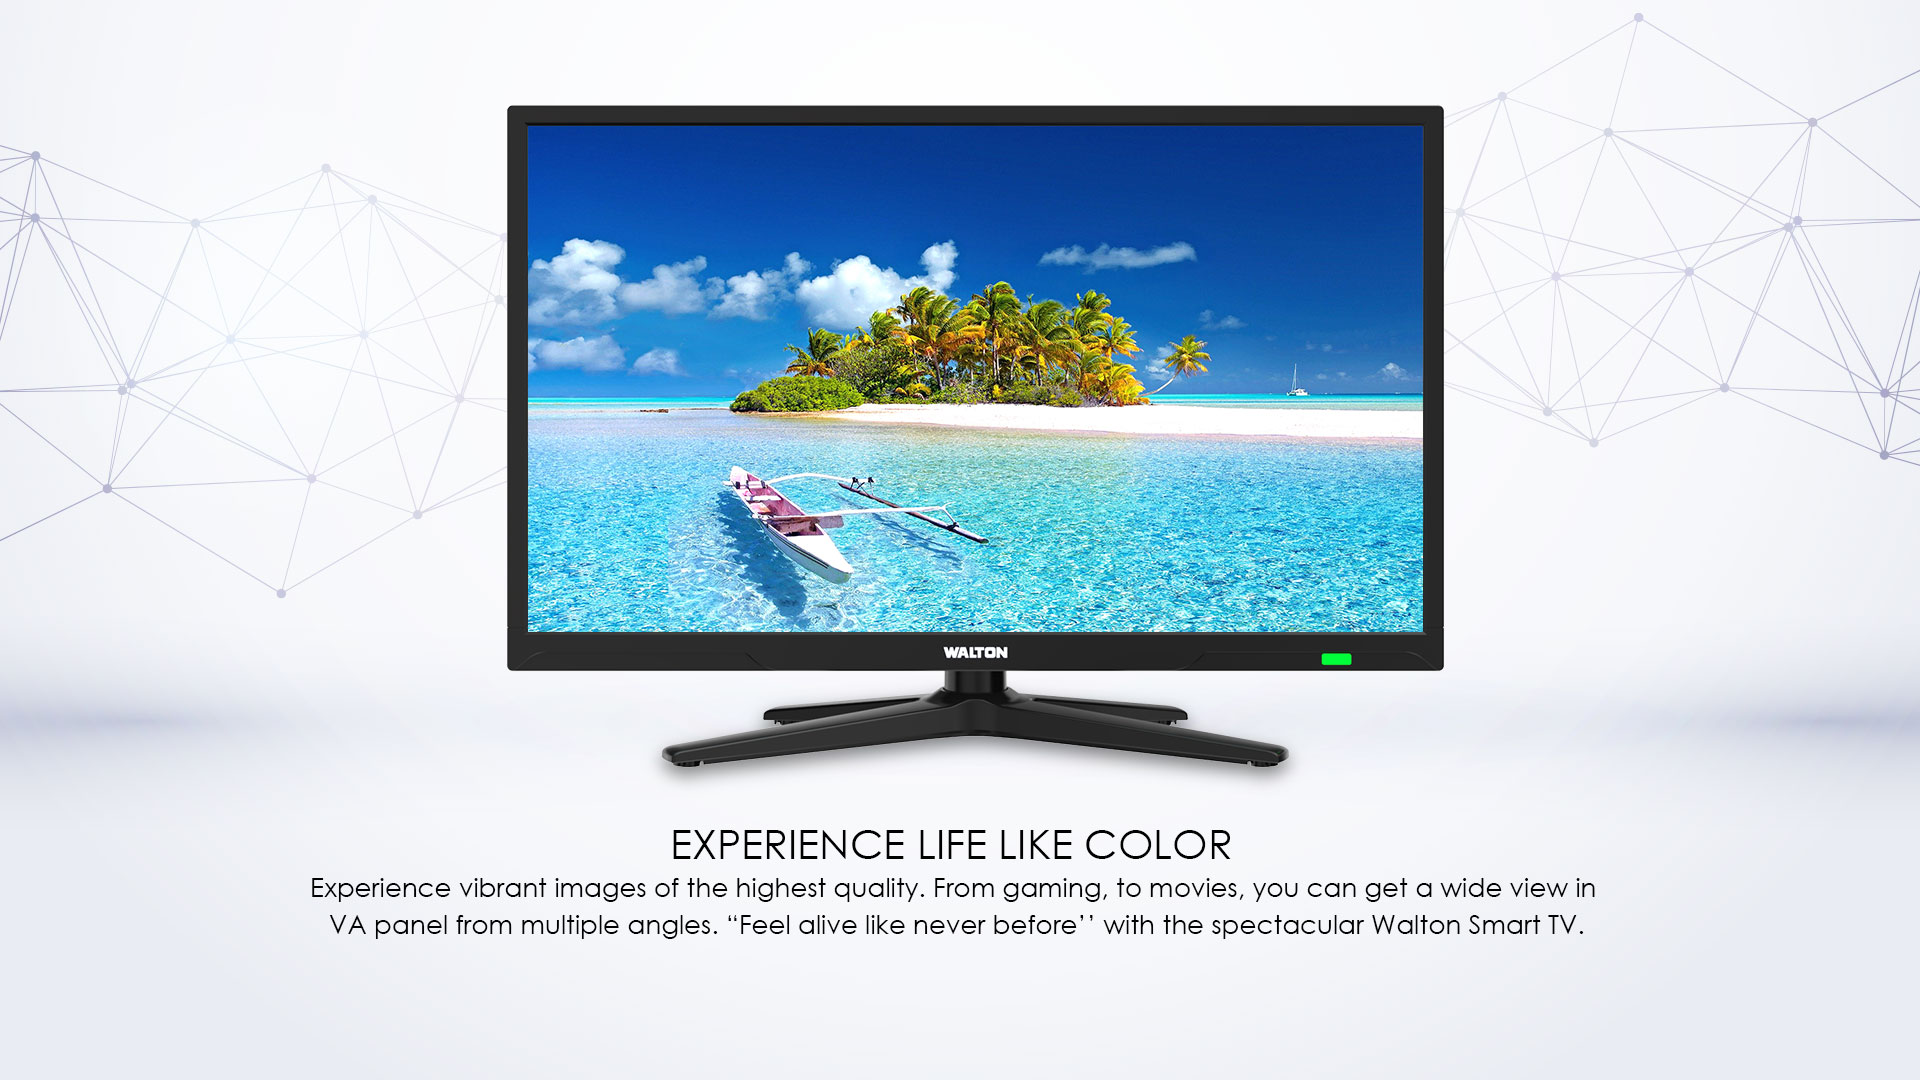 Walton W24D20 (610mm) 24 Inch LED TV Price In BD | Tech Deal